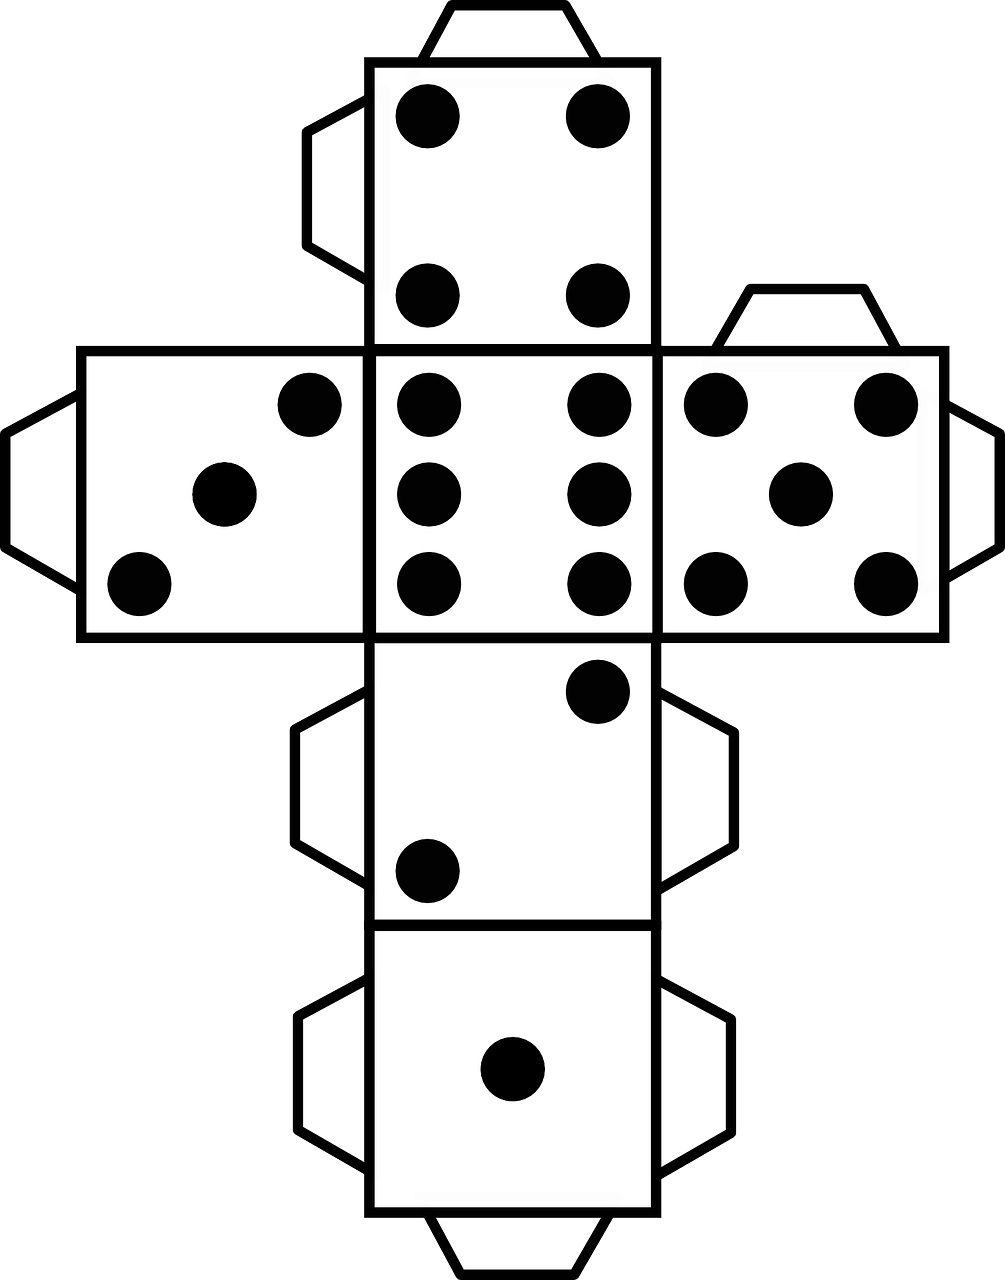 Dice,die,cube,game,printable - free image from needpix.com